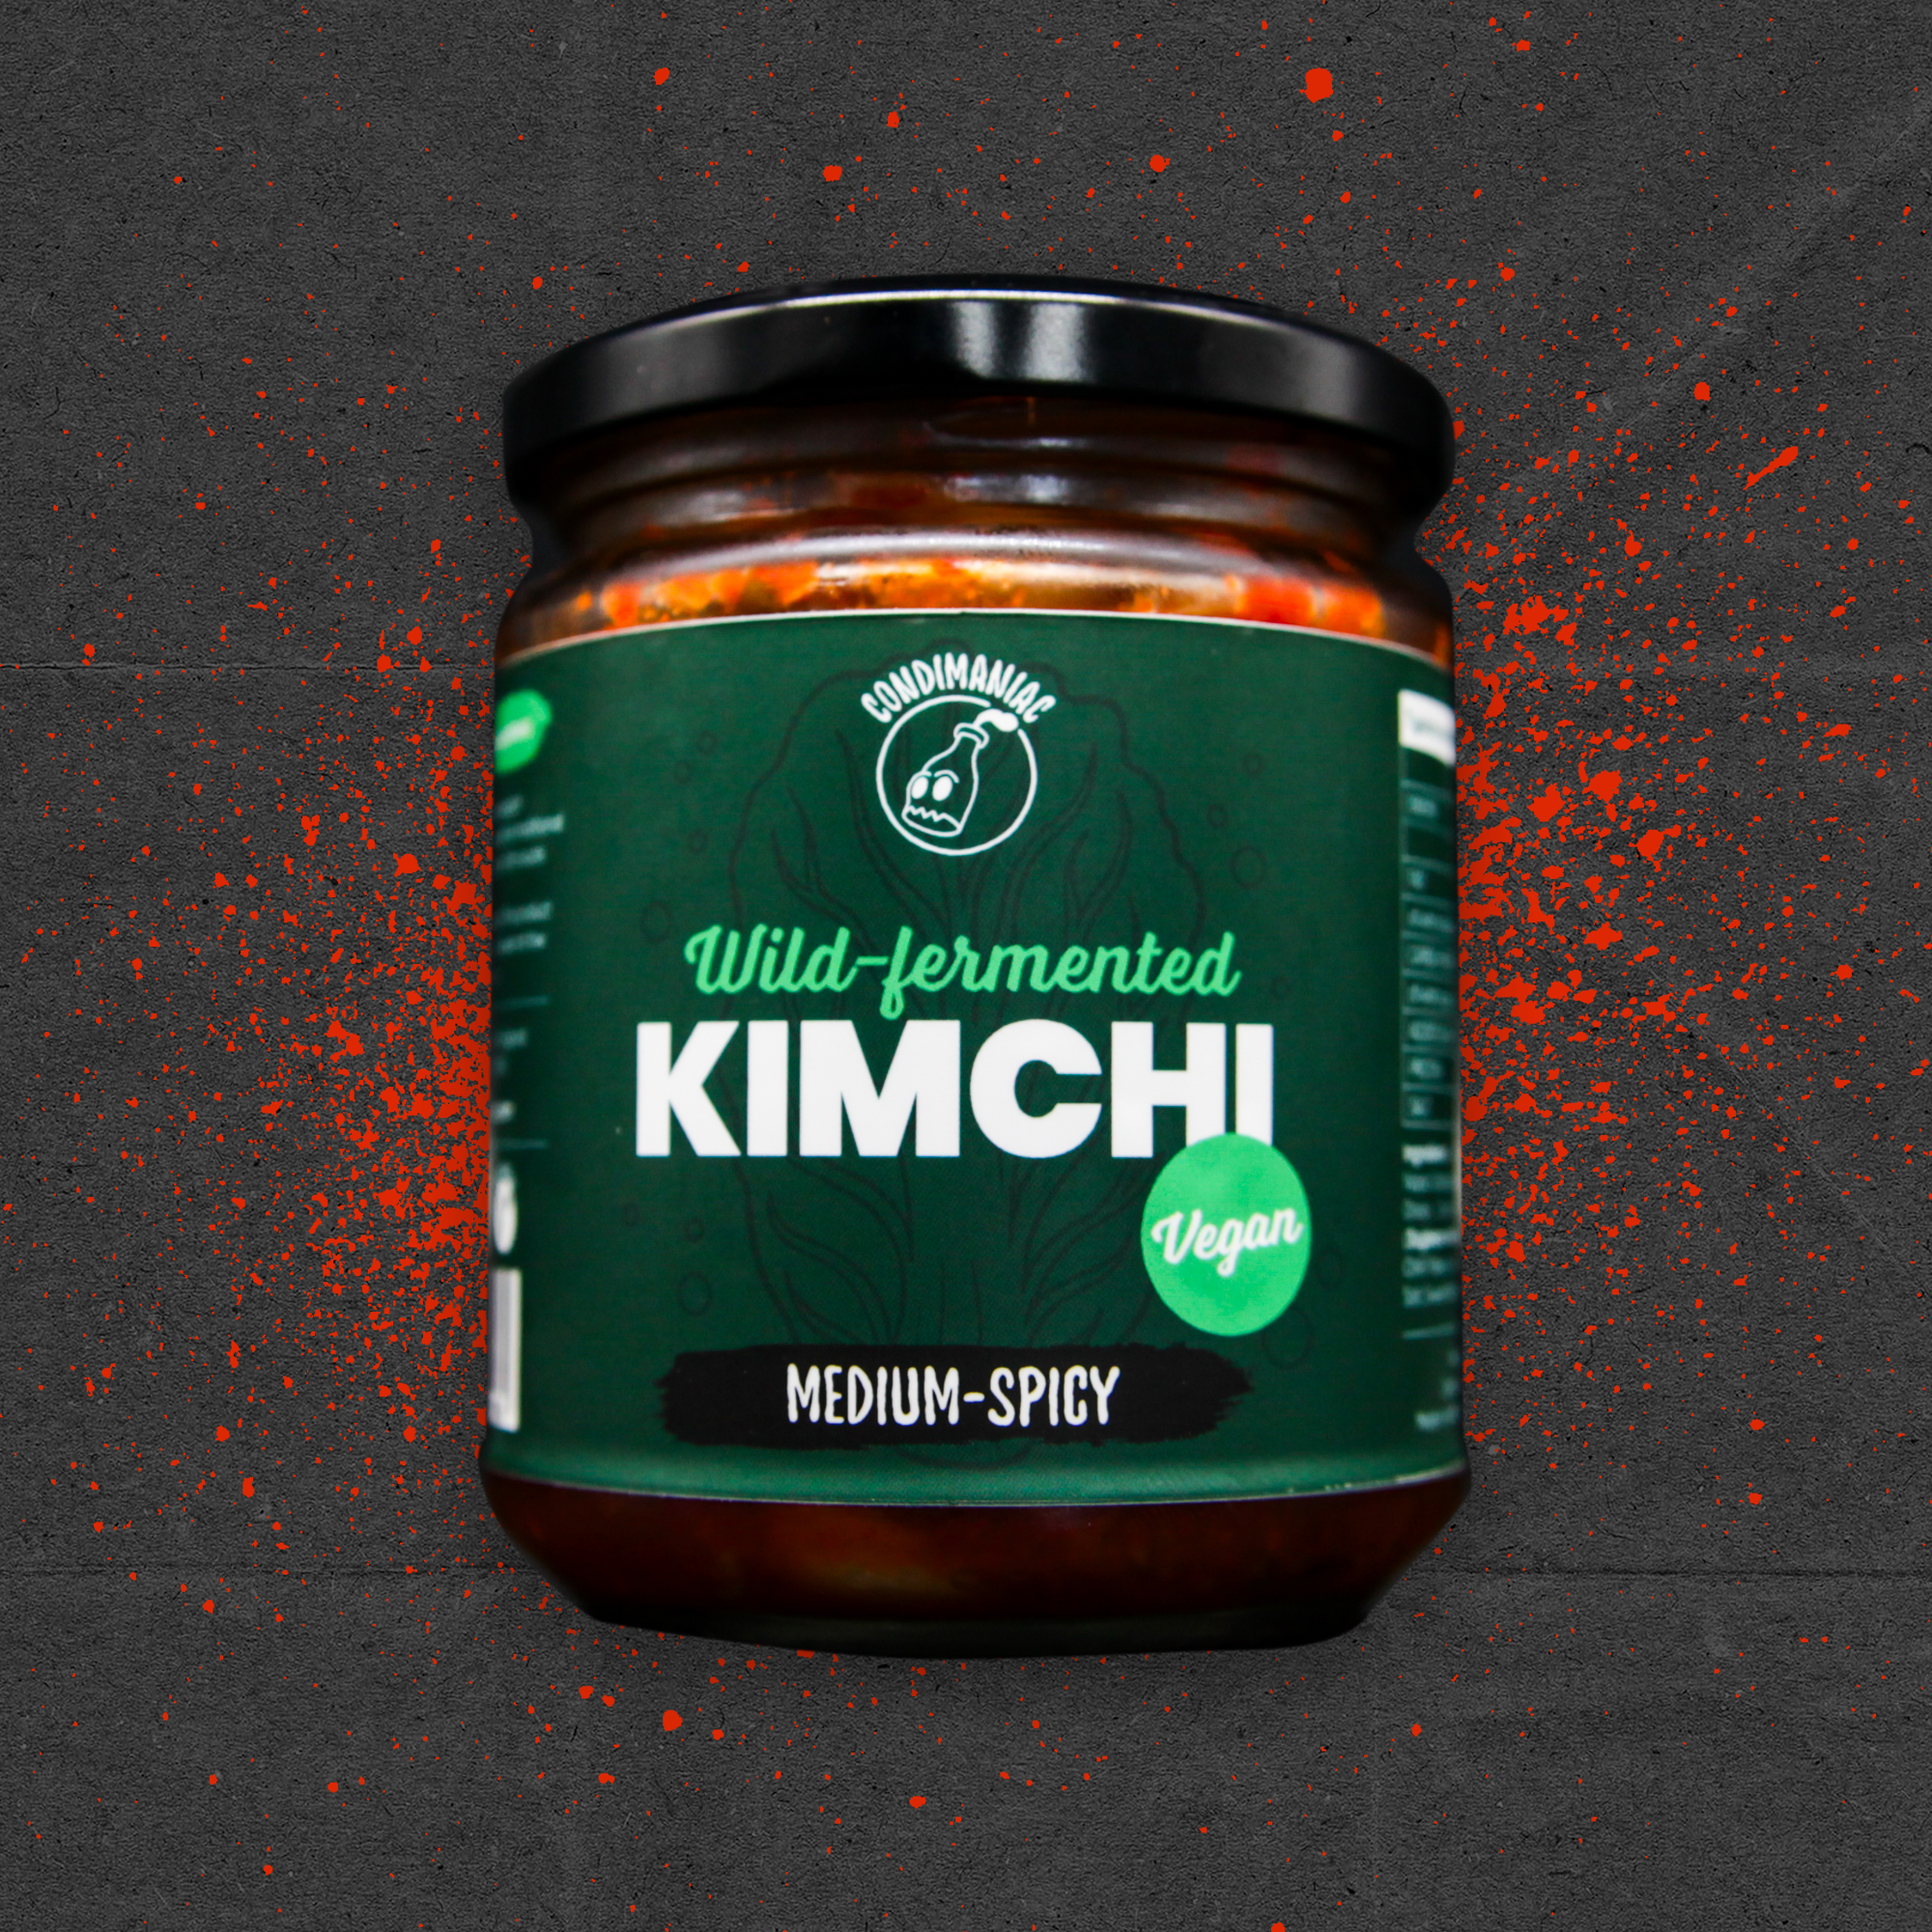 Condimaniac wild-fermented Kimchi (vegan)